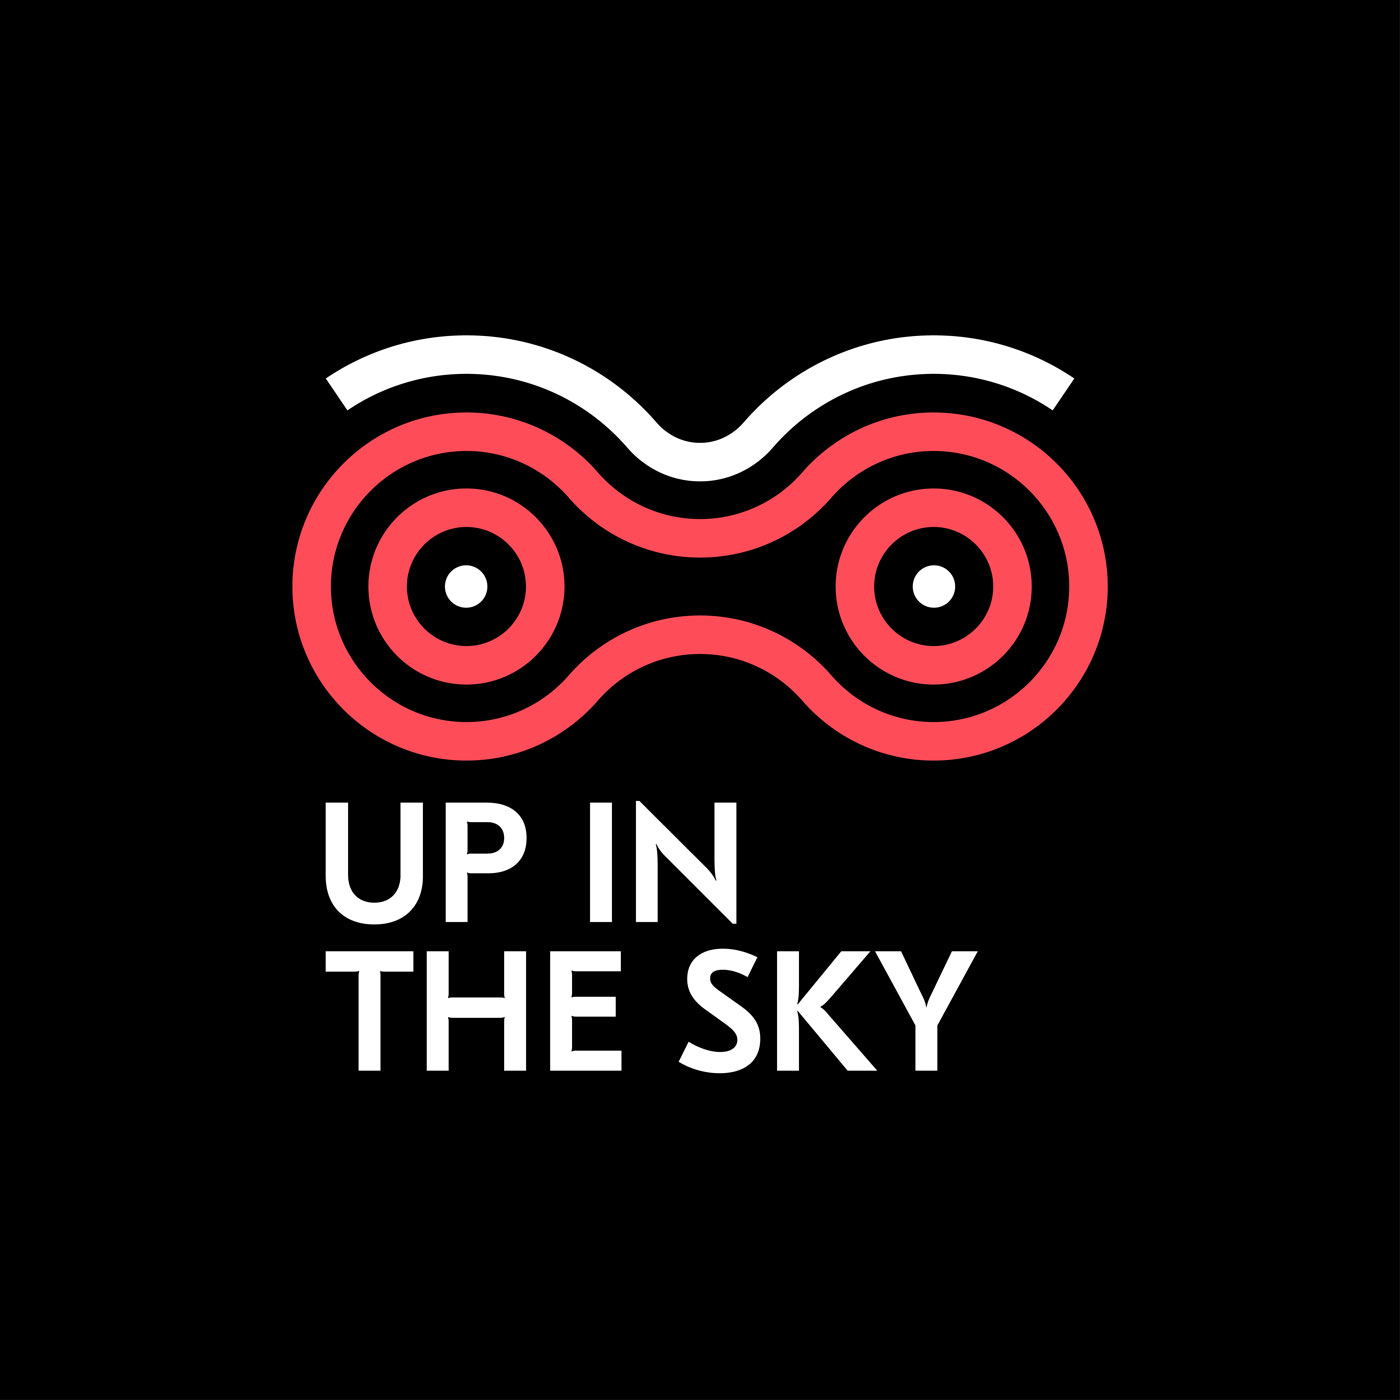 Logo du podcast natif "Up in the sky". [RTS - RTS]